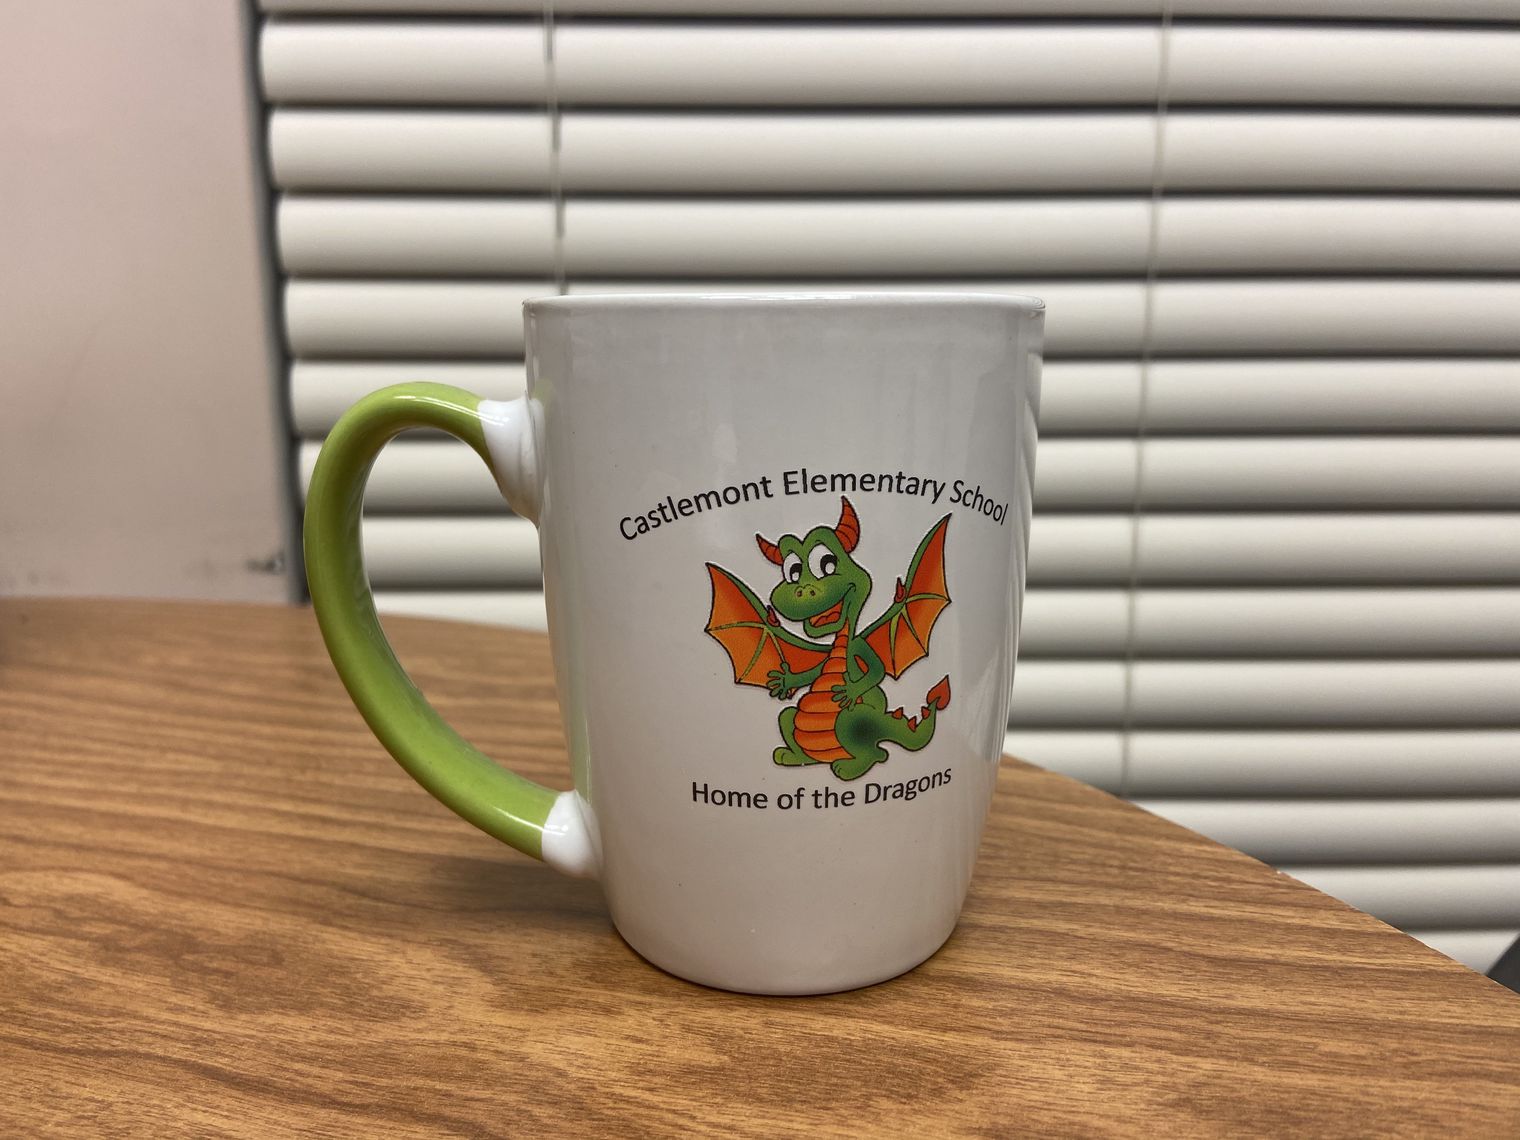 Coffee mug with a green dragon on the side